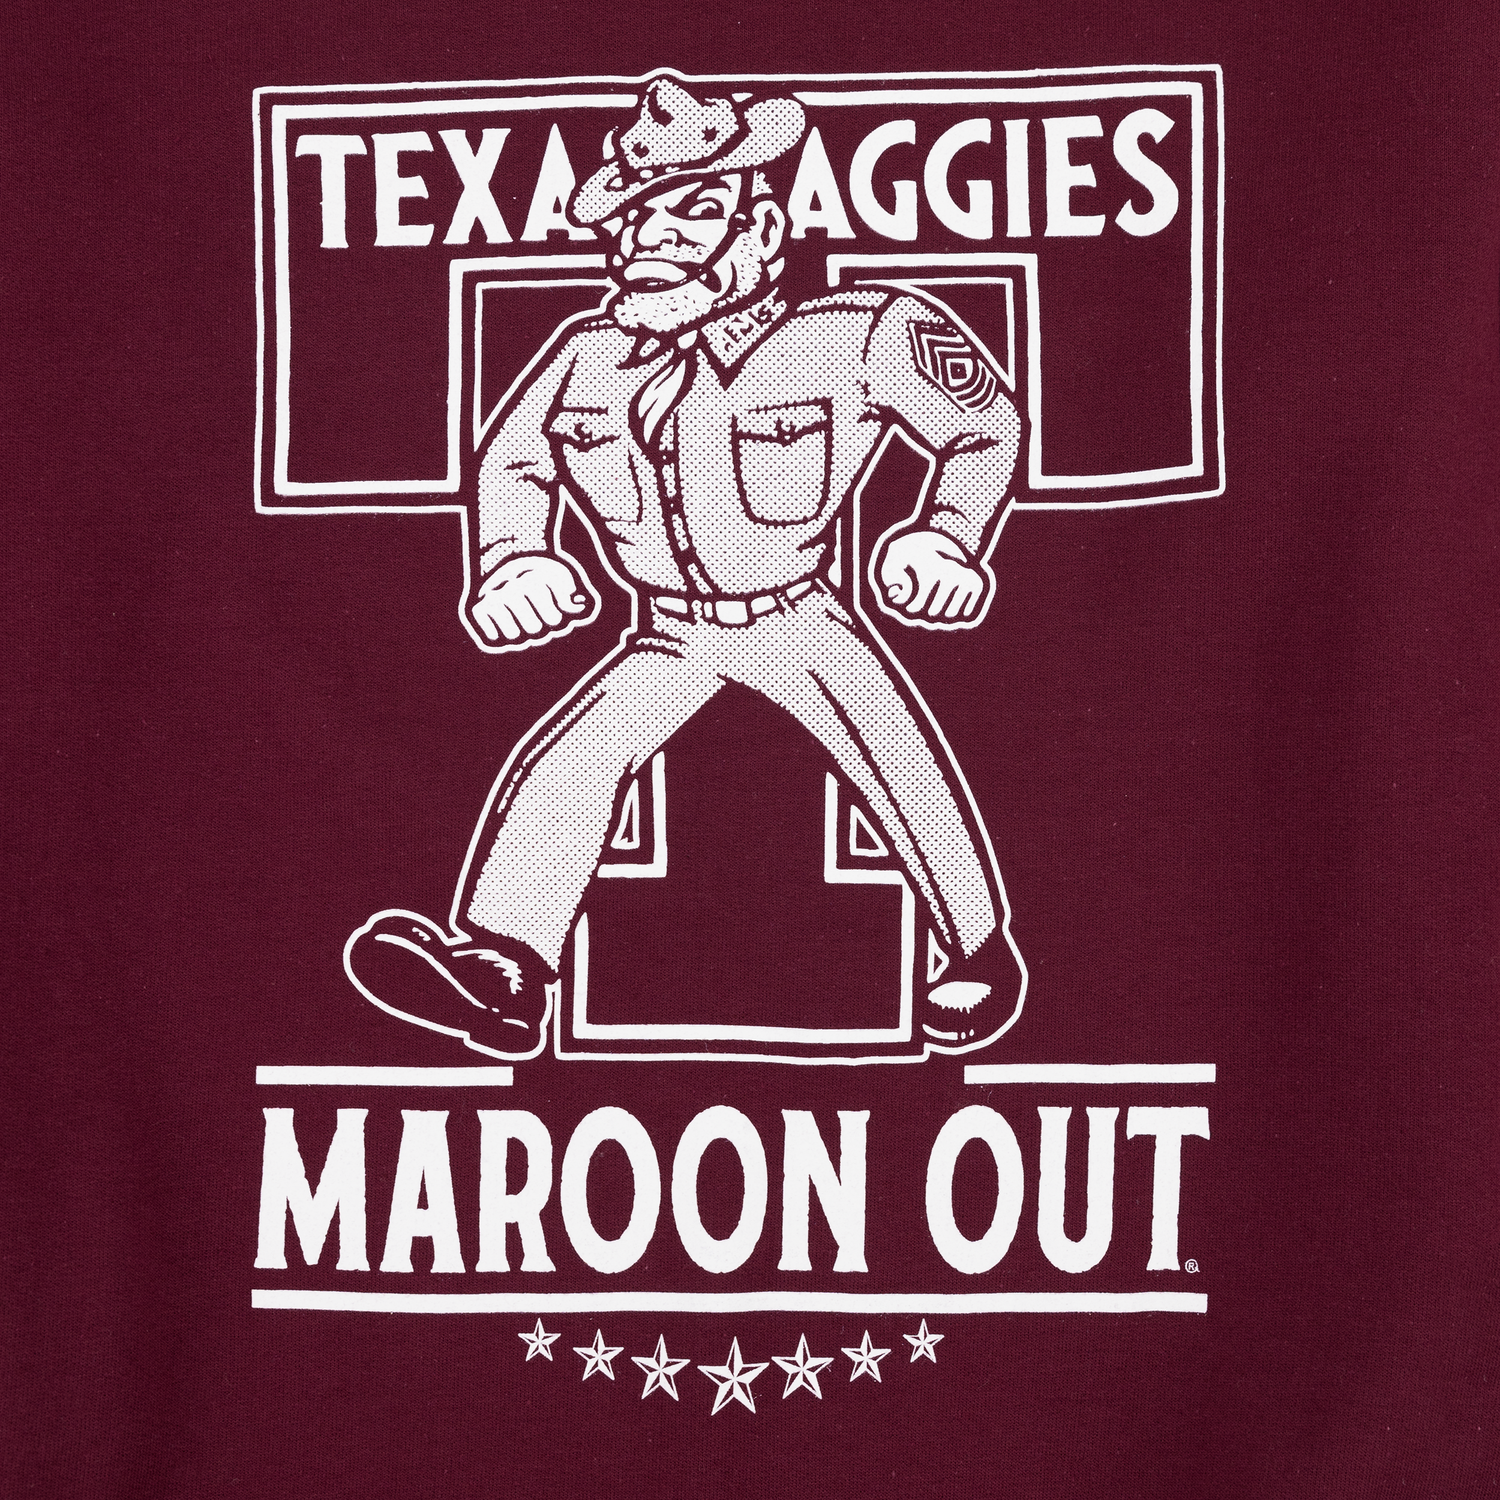 Maroon Out Texas Aggies Sarge Sweatshirt